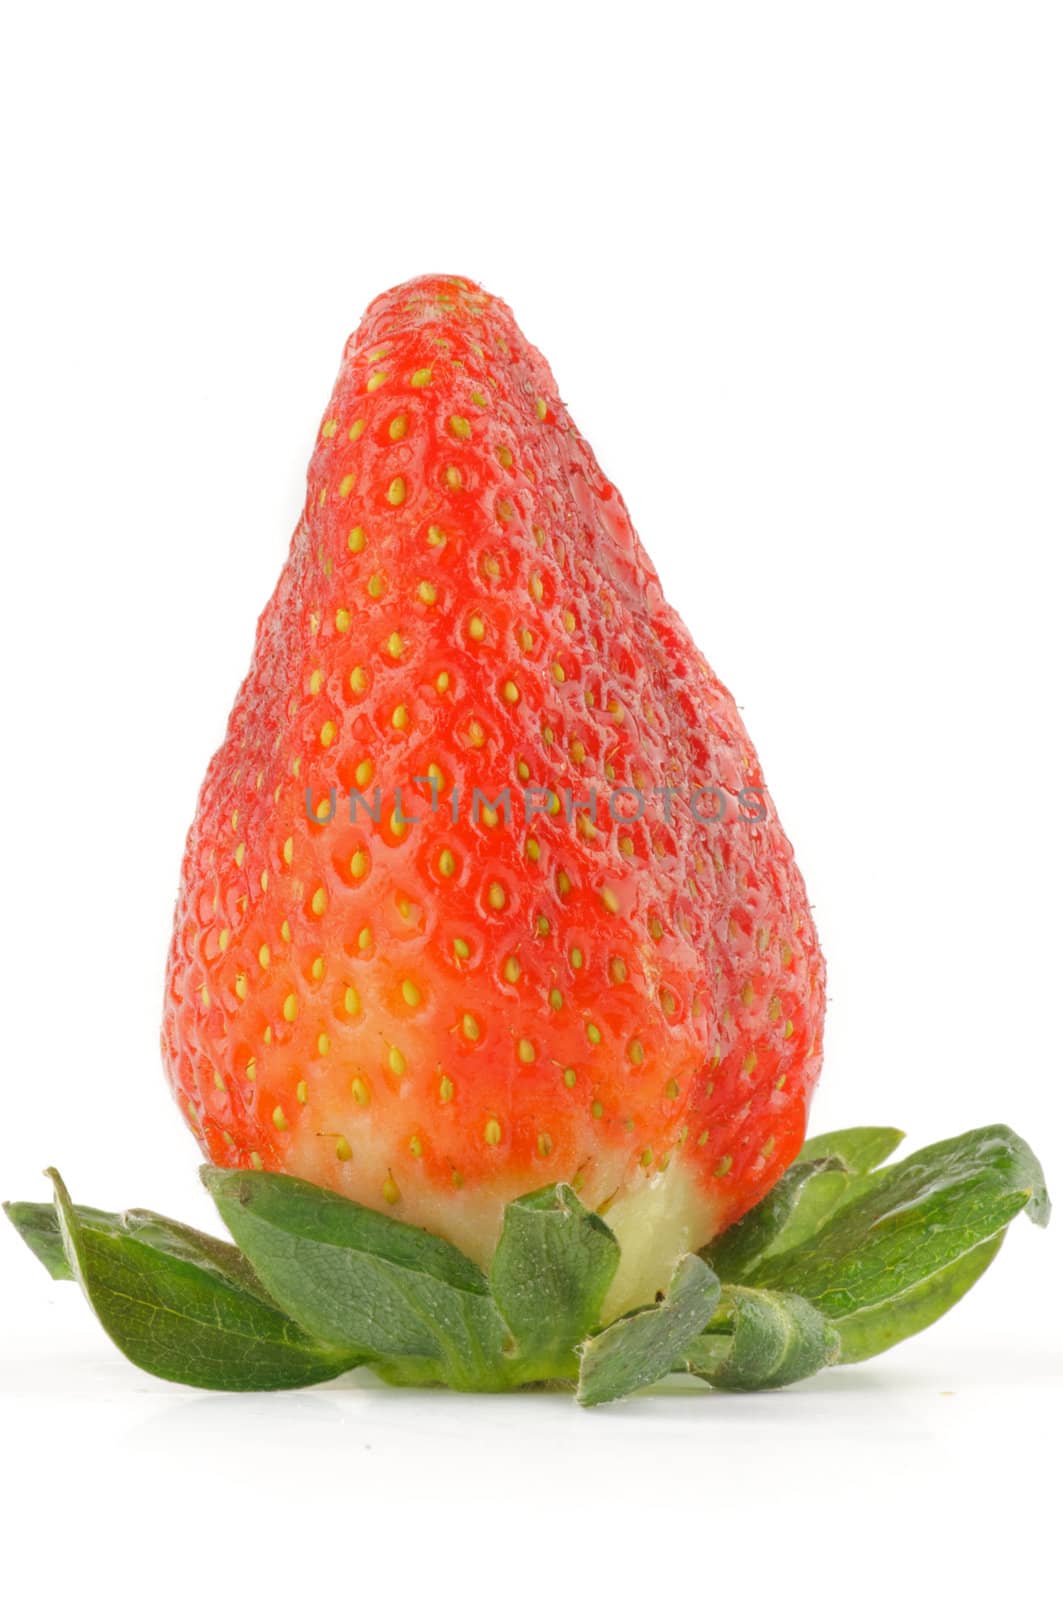 Fresh Ripe Perfect Strawberry by zhekos